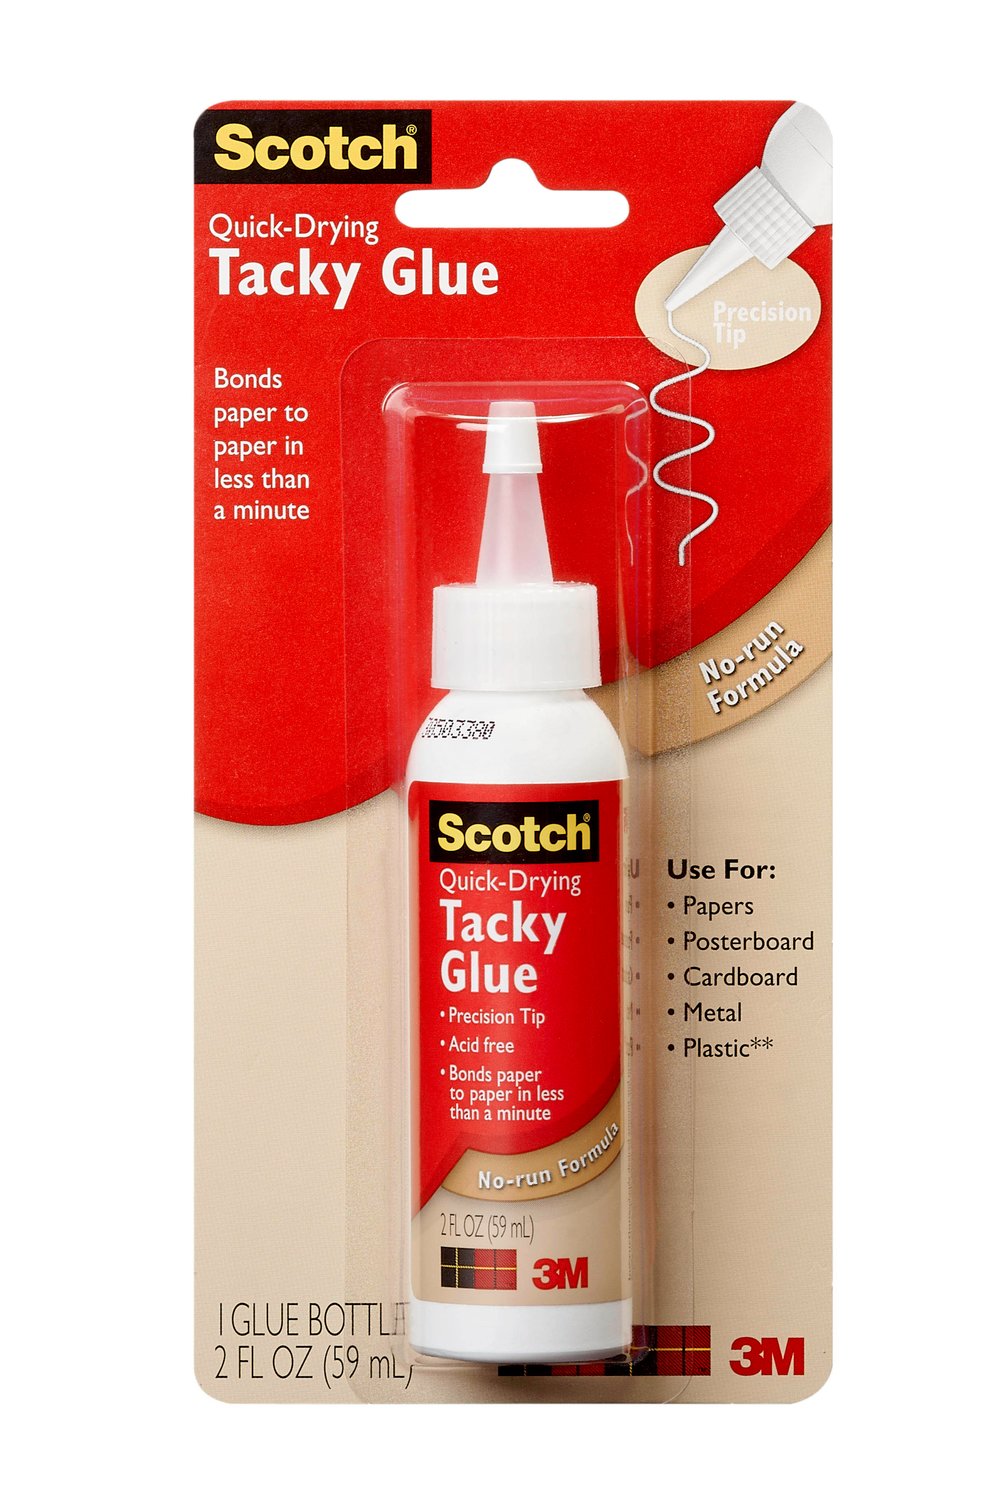 7010372685 - Scotch Quick Drying Tacky Glue 6052A-1, 2 fl oz (59 mL)